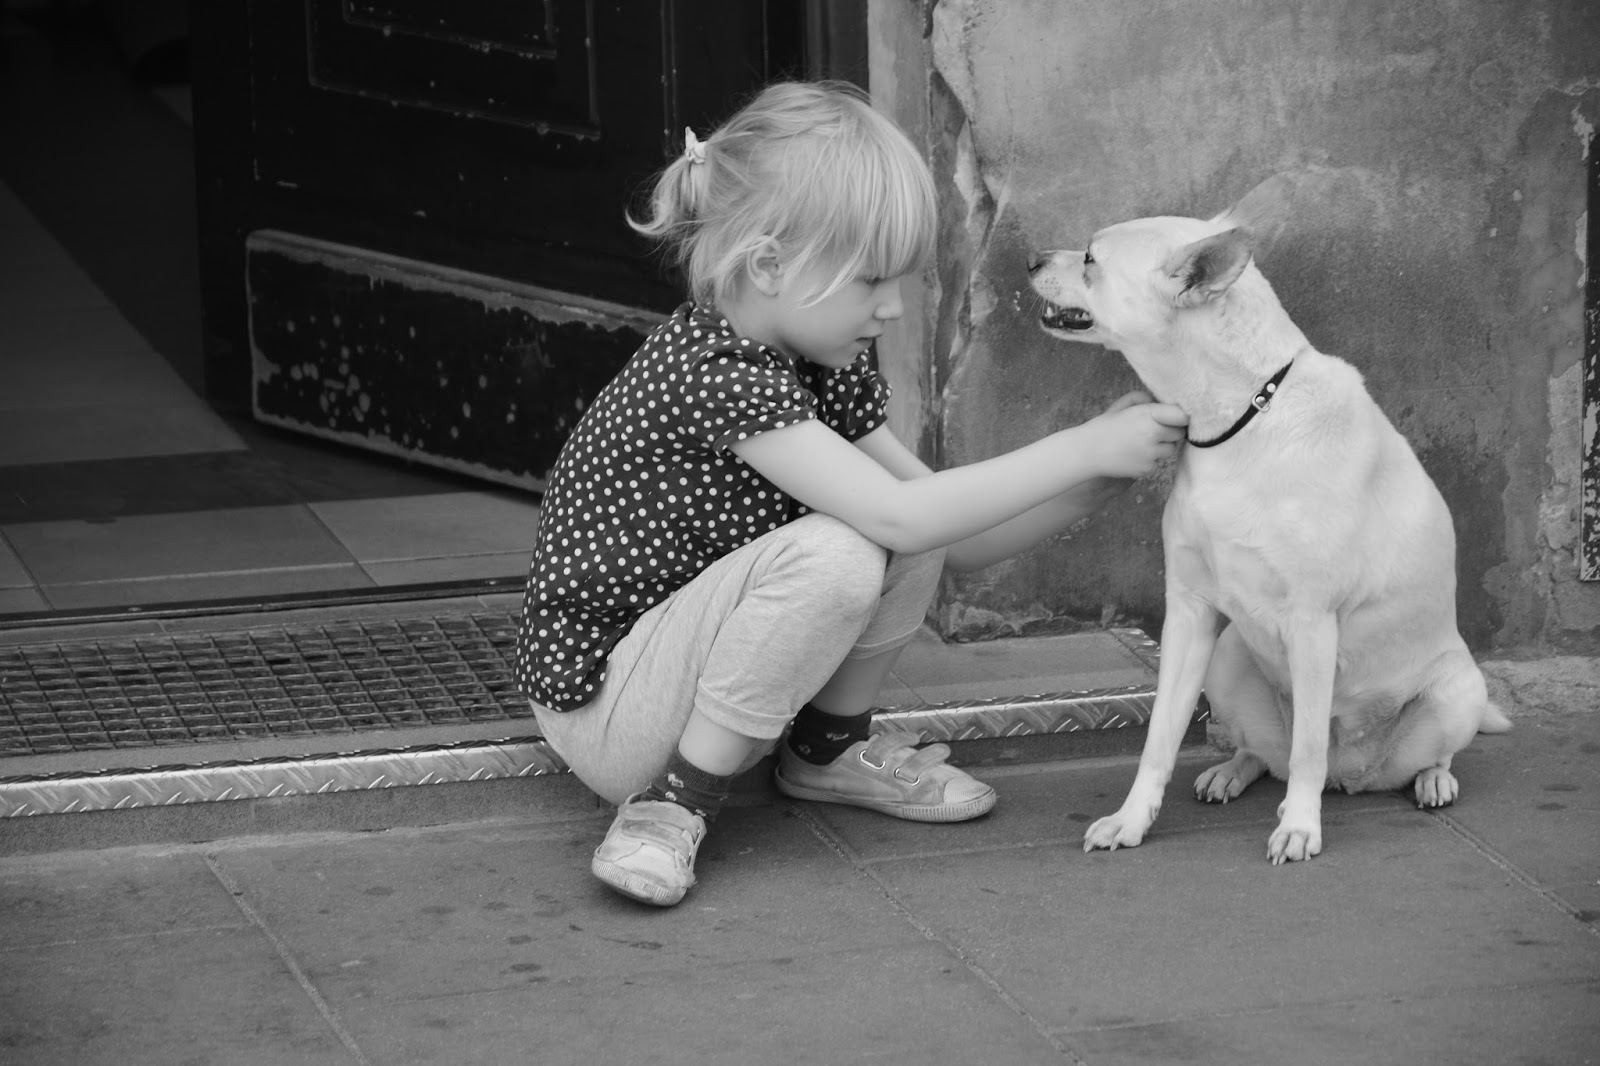 Girl with dog, Warsaw, Poland